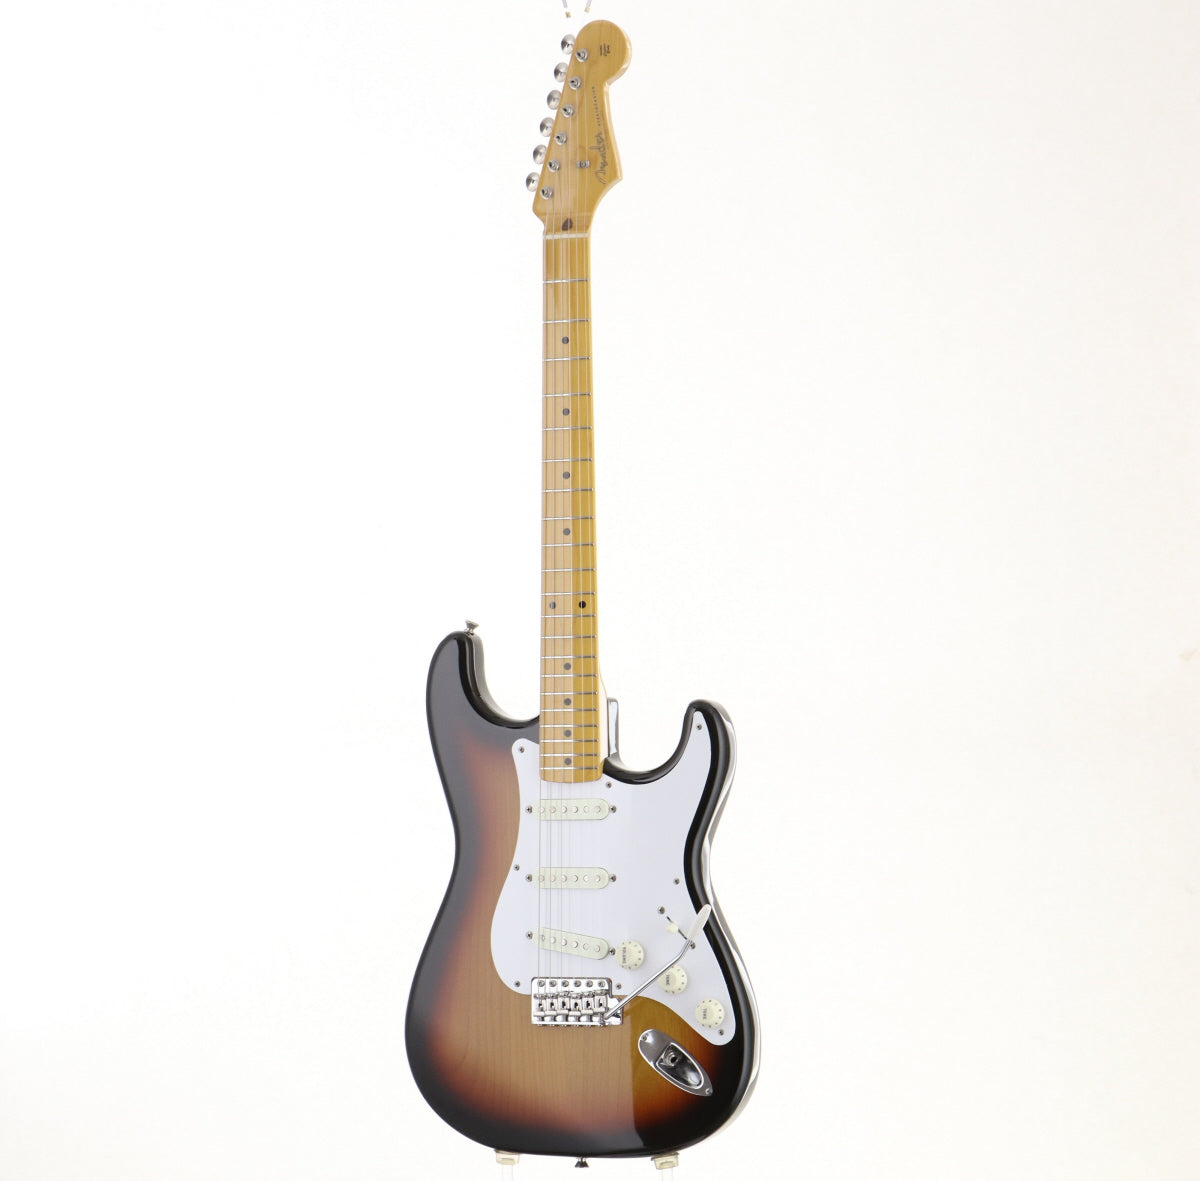 [SN JD17044181] USED Fender / Made in Japan Traditional 58 Stratocaster 3-Color Sunburst [03]